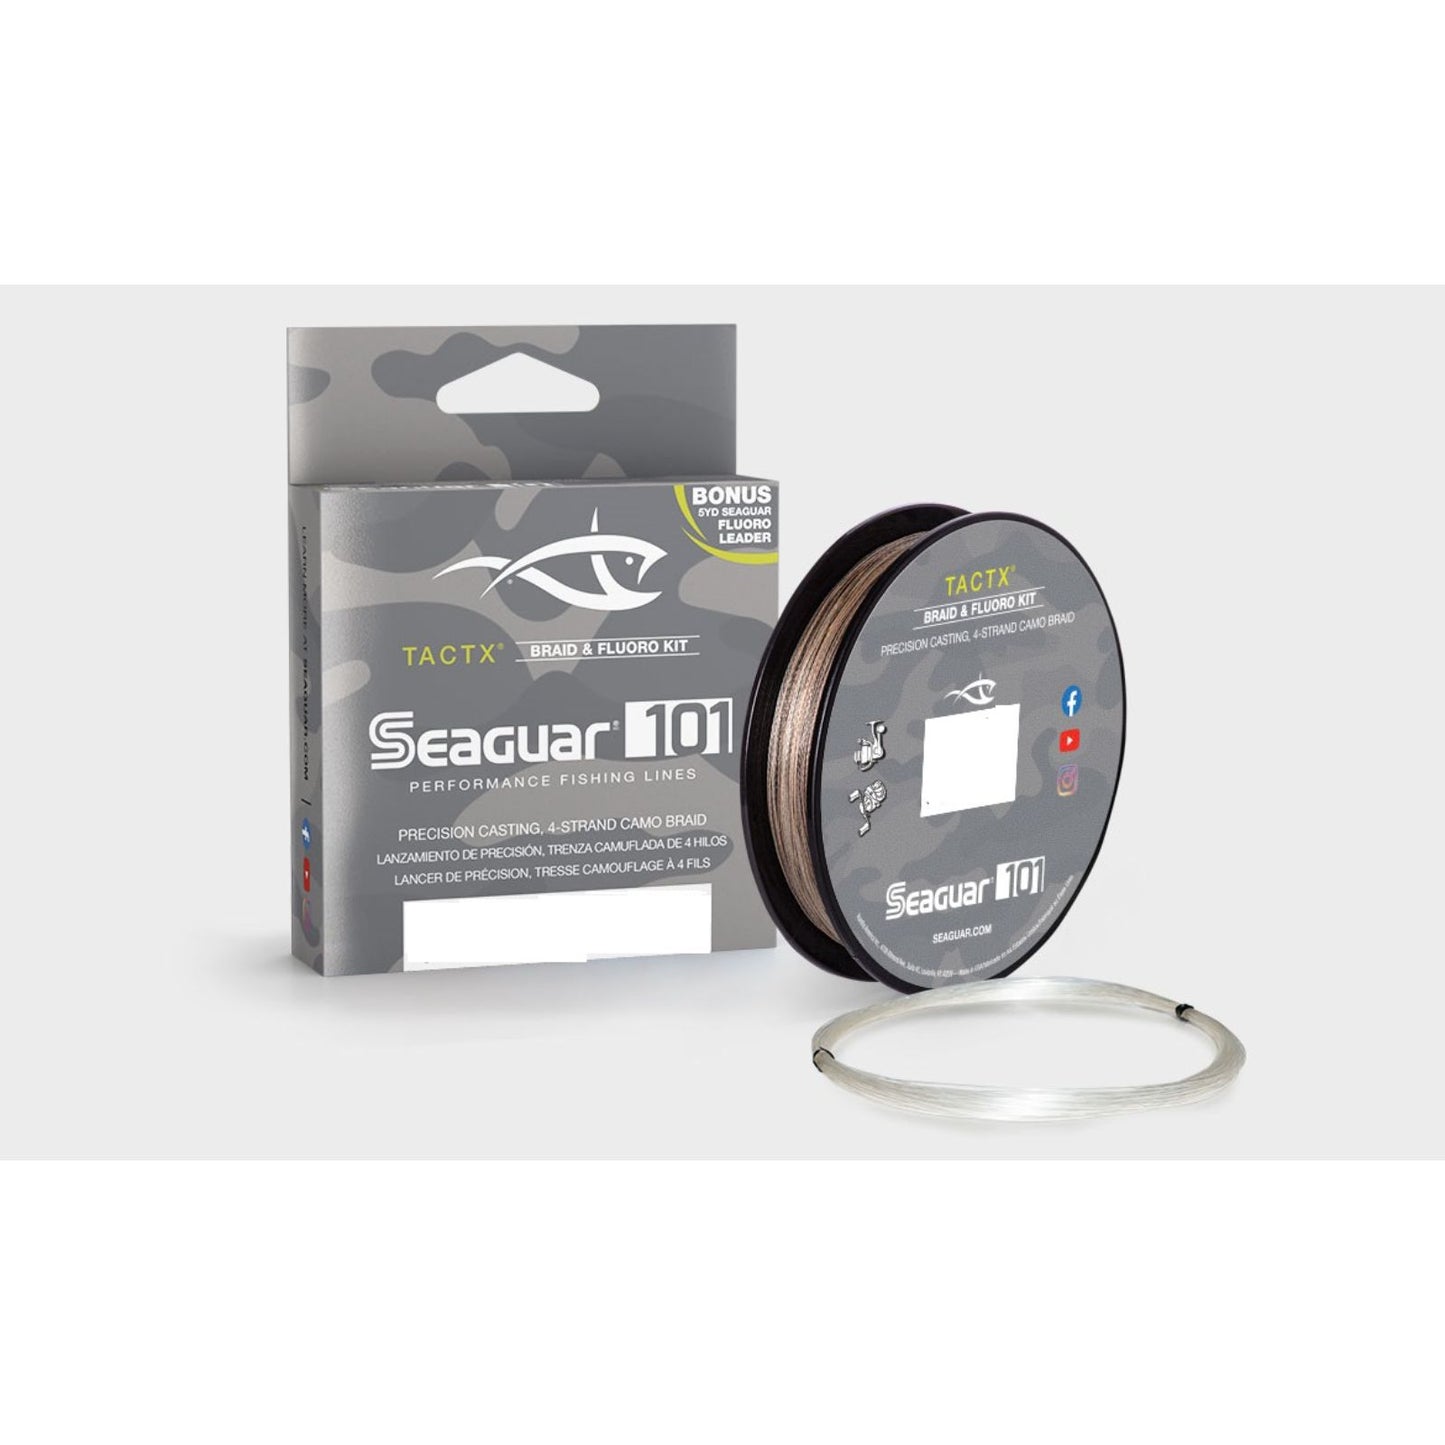 Seaguar 101 TactX 50TCX300 Braid w Fluoro Leader 300 Yds